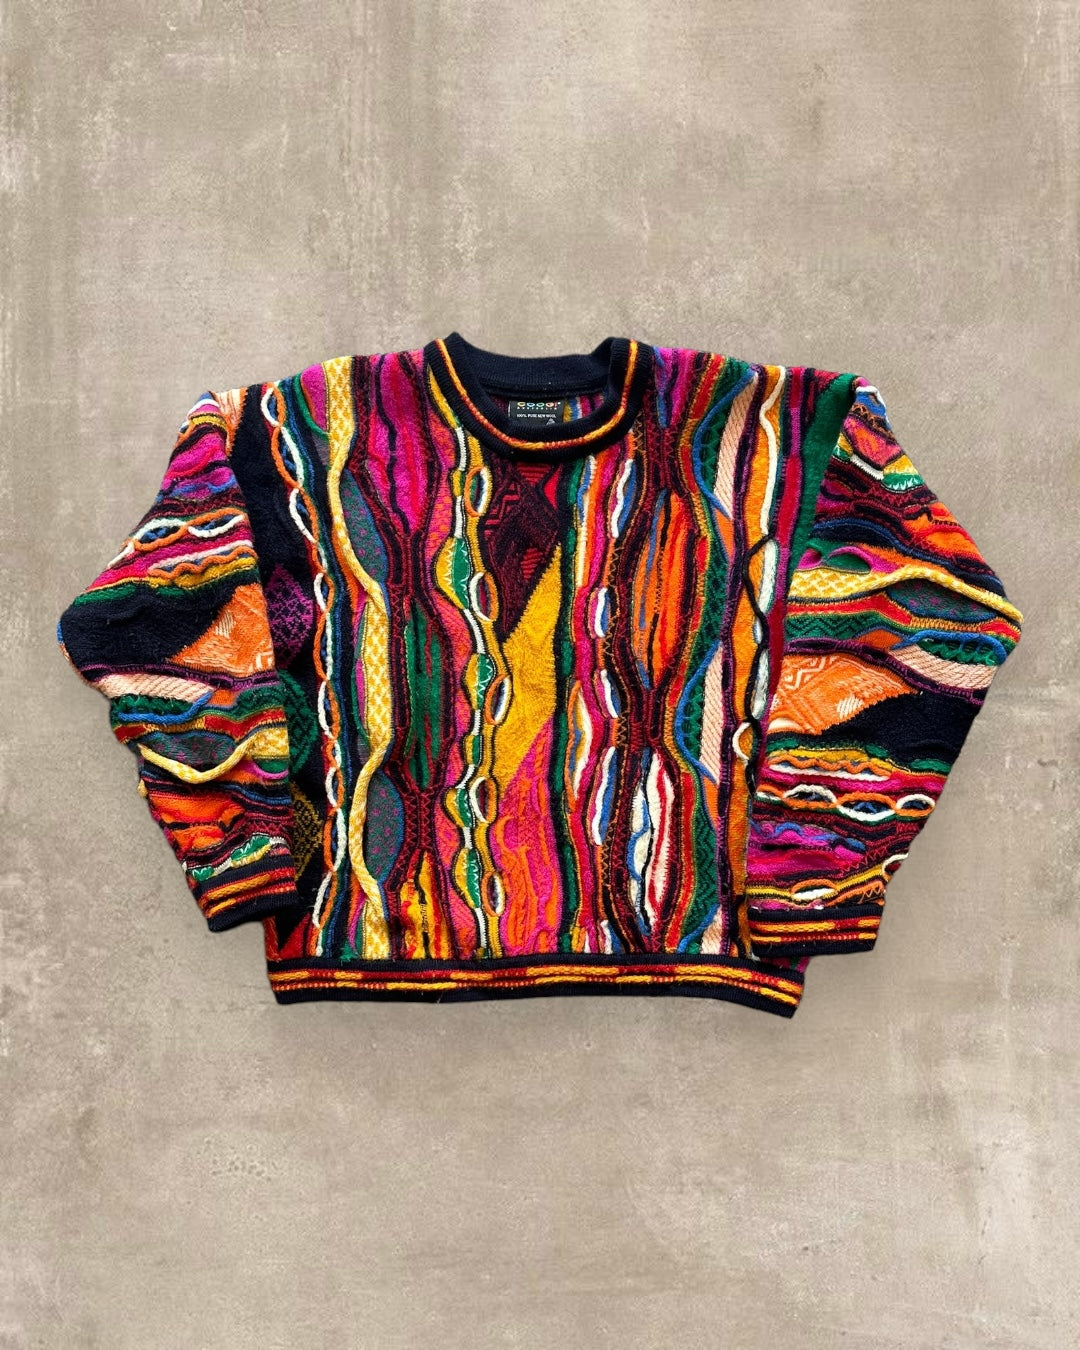 90s Coogi Sweater - M/L